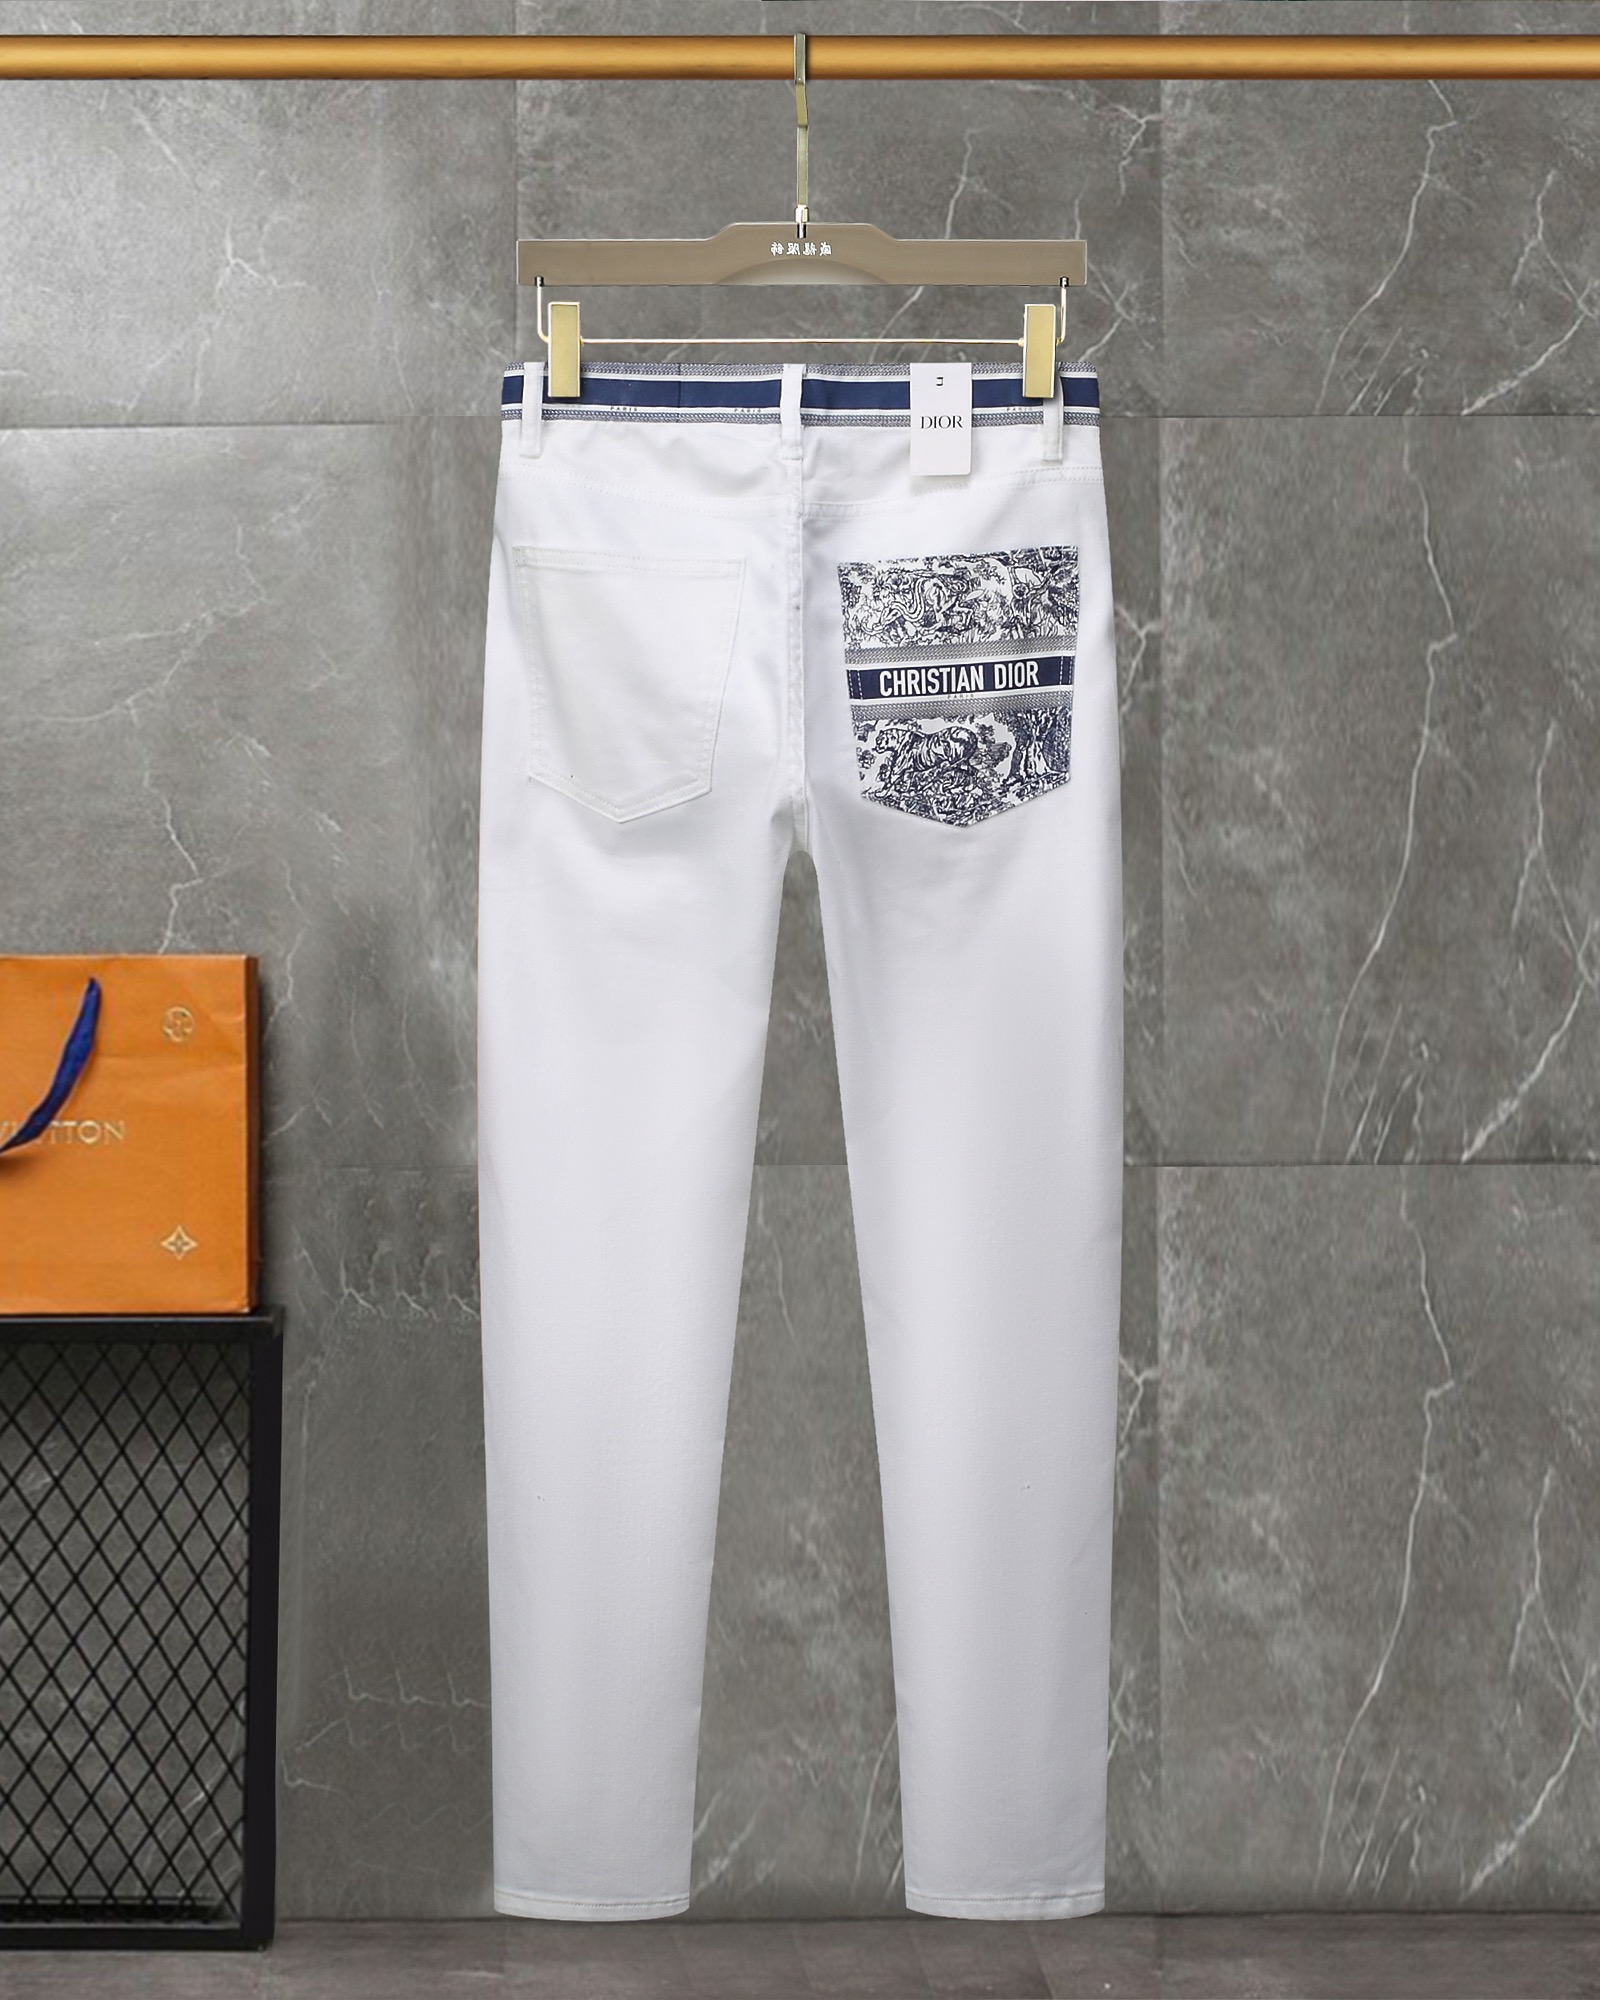 HOT品質保証 ディオール パンツ メンズ激安通販 デニム ズボン ジーンズ 夏品 薄い 柔らかい 美脚 ファッション ホワイト_2